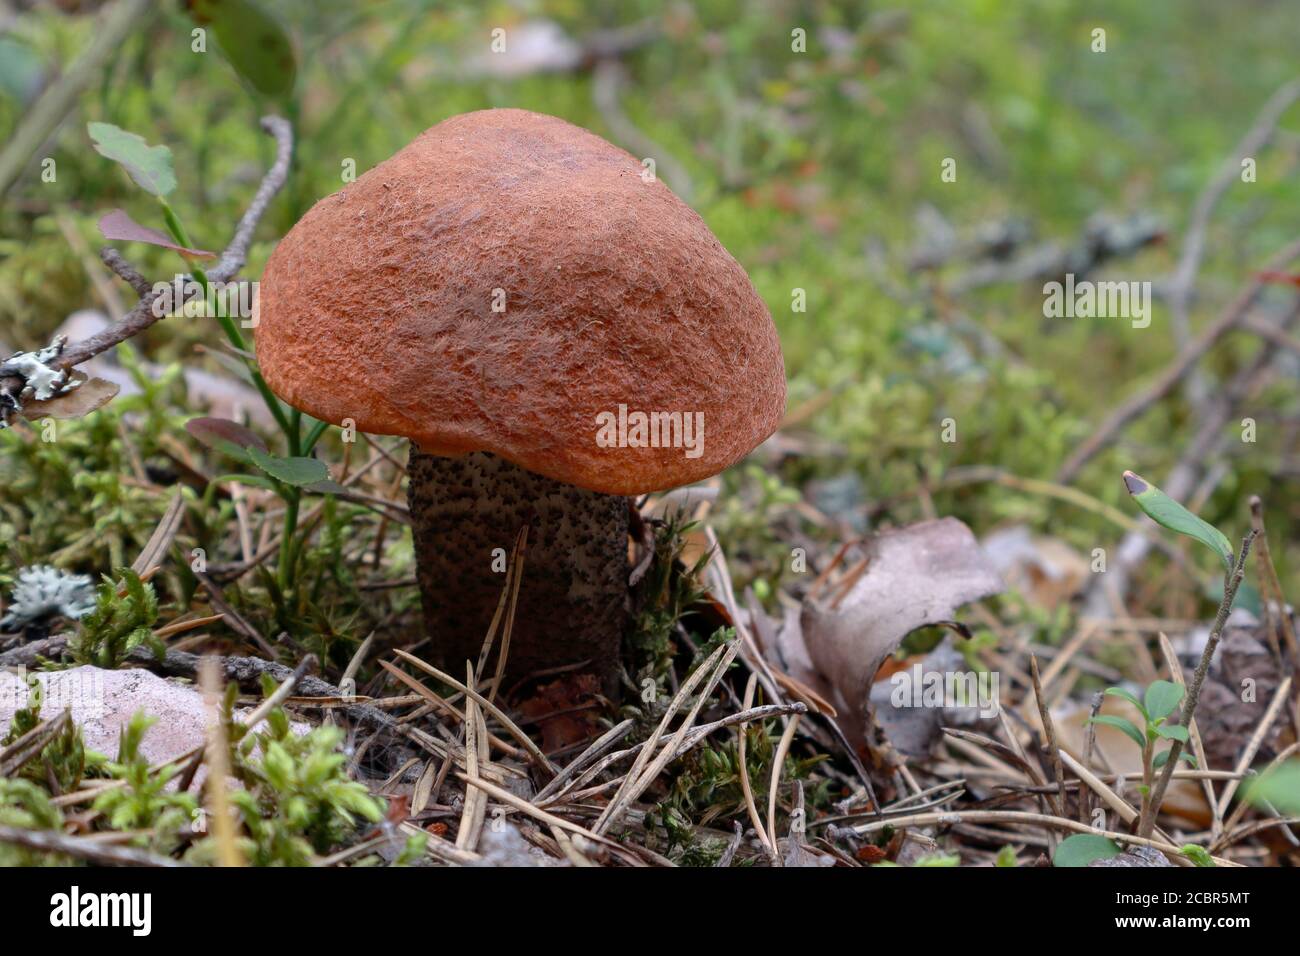 Boletus edible Wild mushroom in autumn forest. Selective focus blurred background Stock Photo